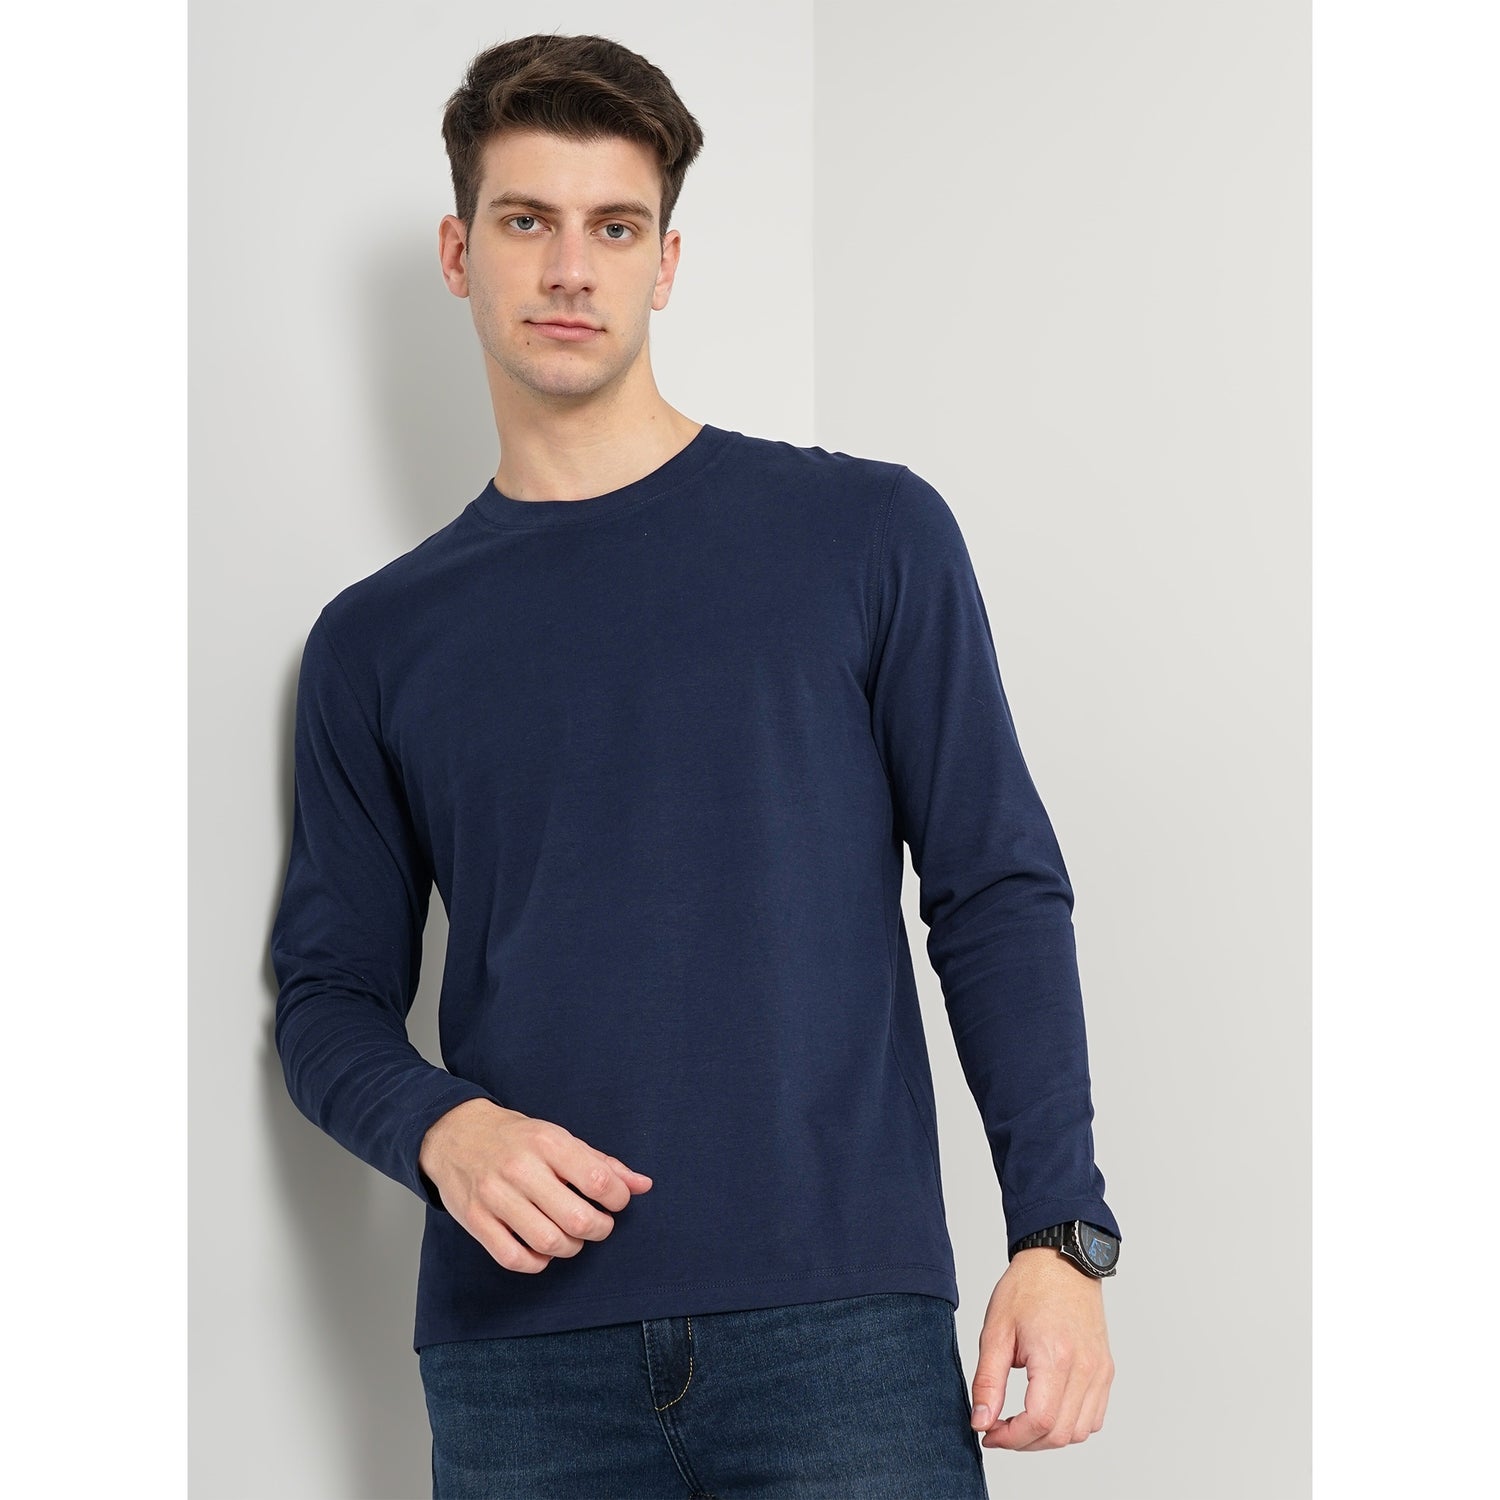 Men's Navy Blue Solid Regular Fit Pure Cotton Jersey Tshirt (CESOLACEMLIN)